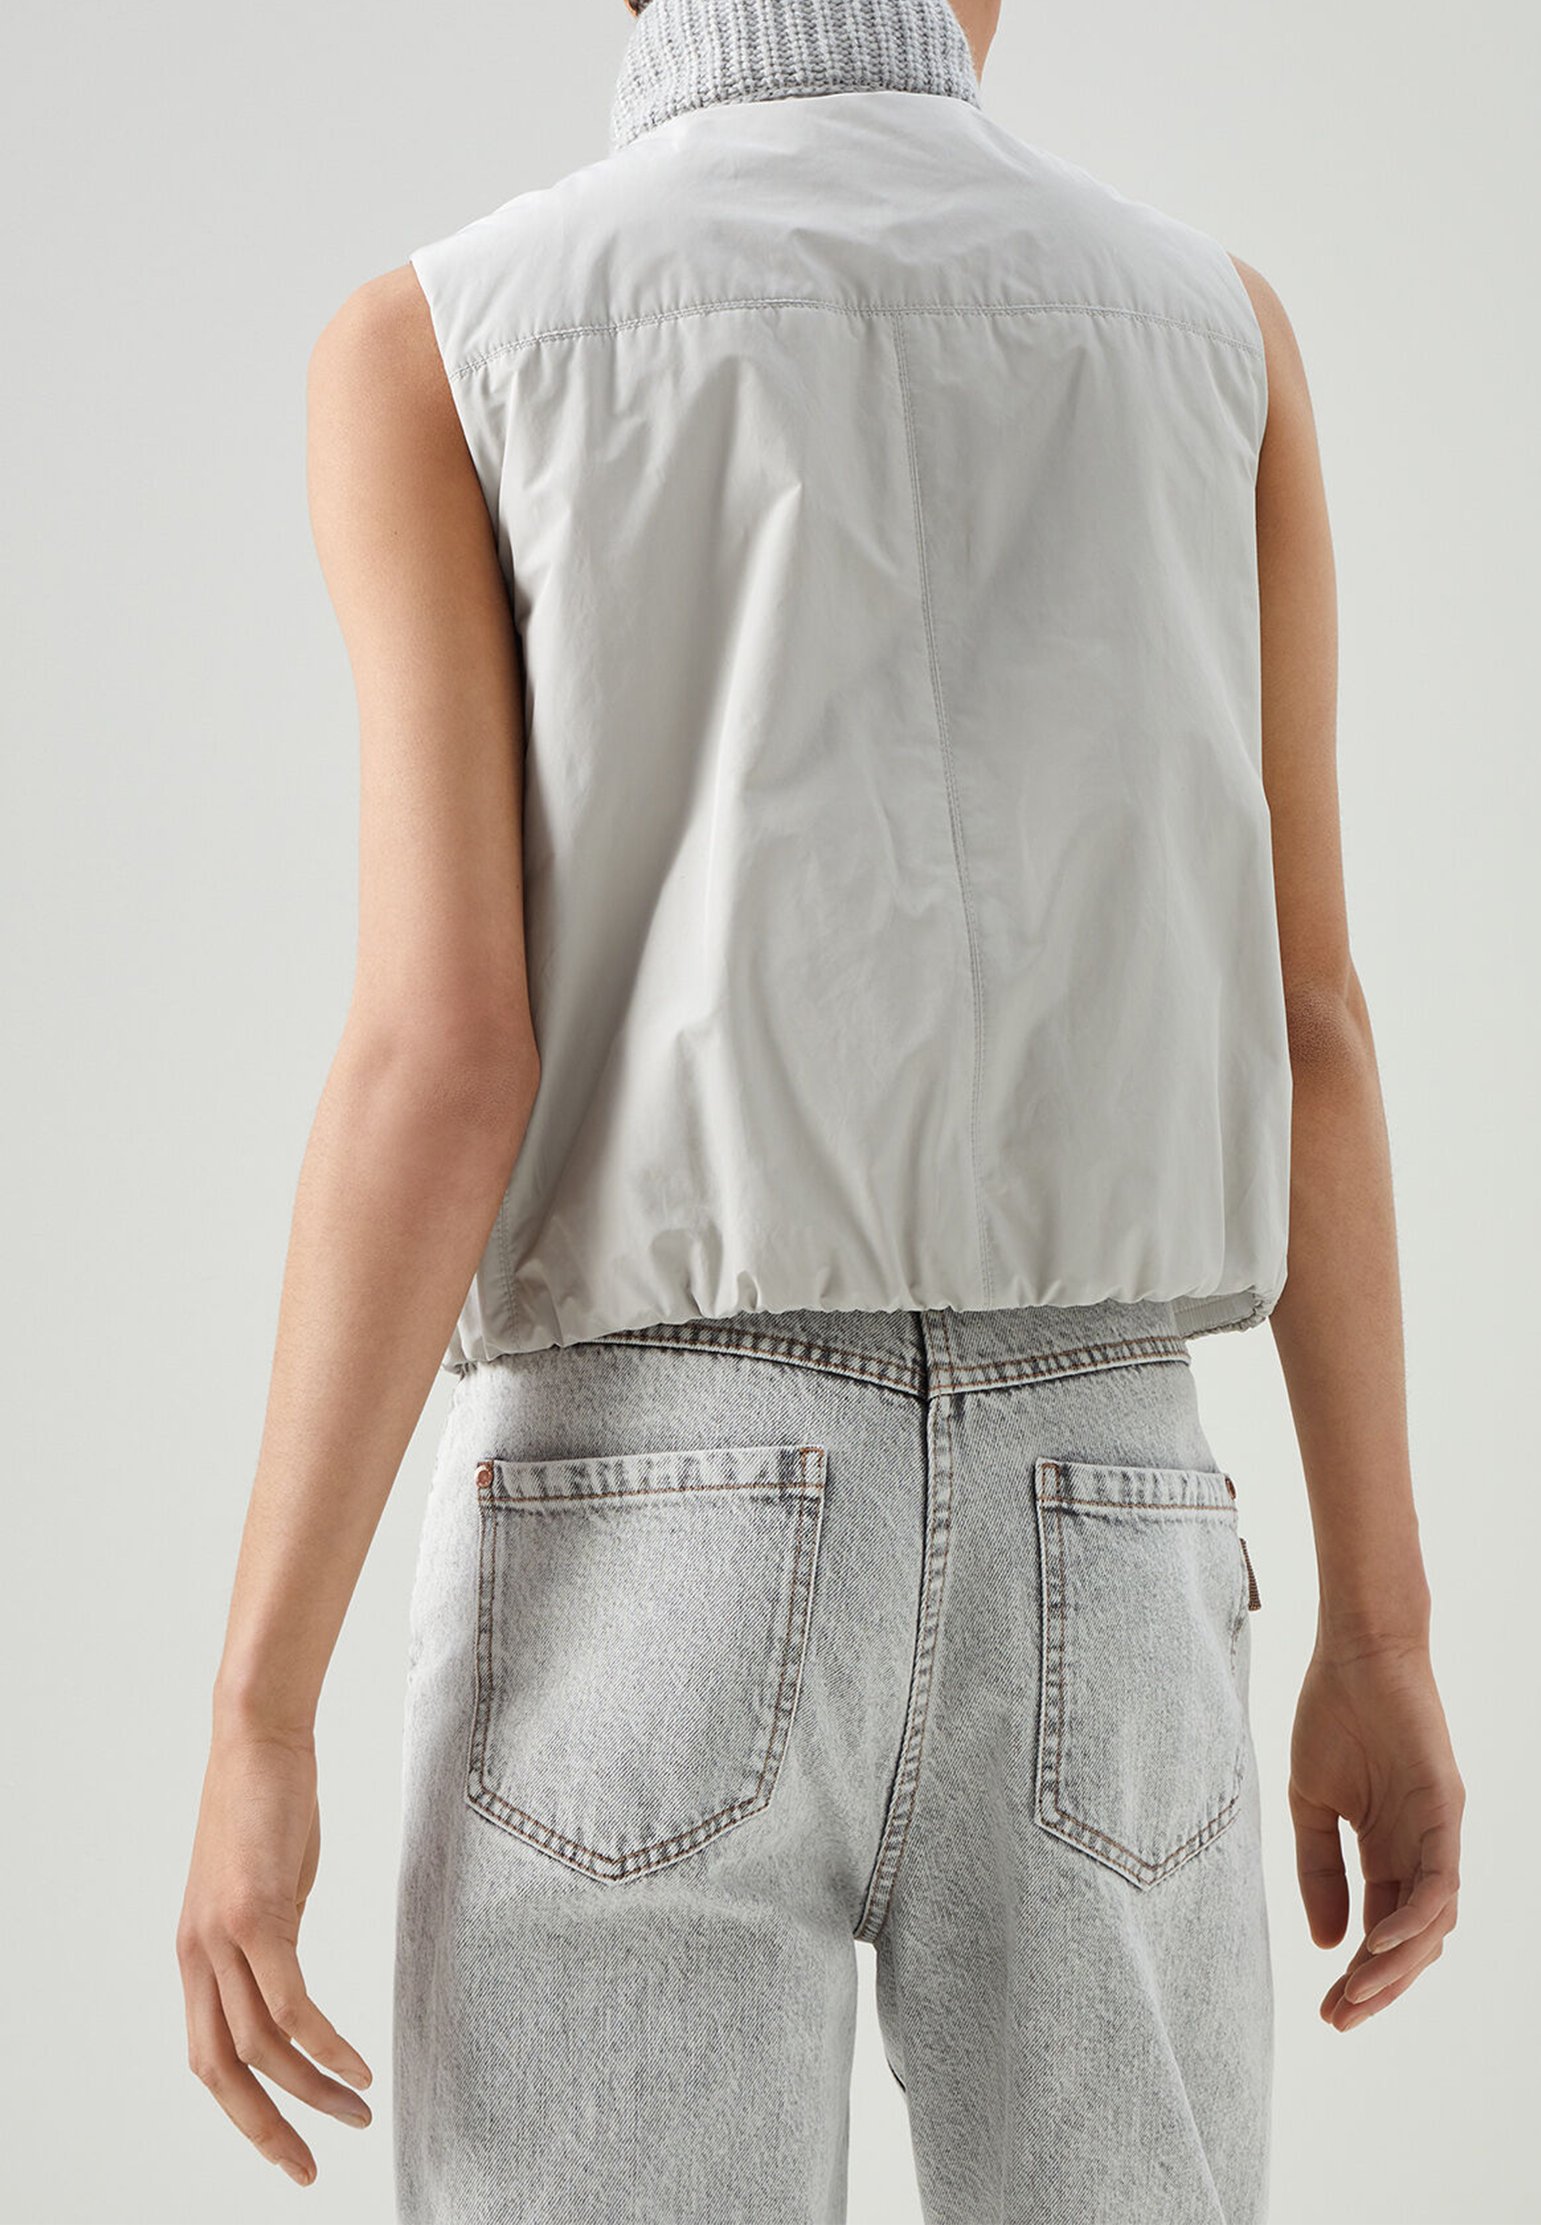 Vest BRUNELLO CUCINELLI Color: grey (Code: 901) in online store Allure